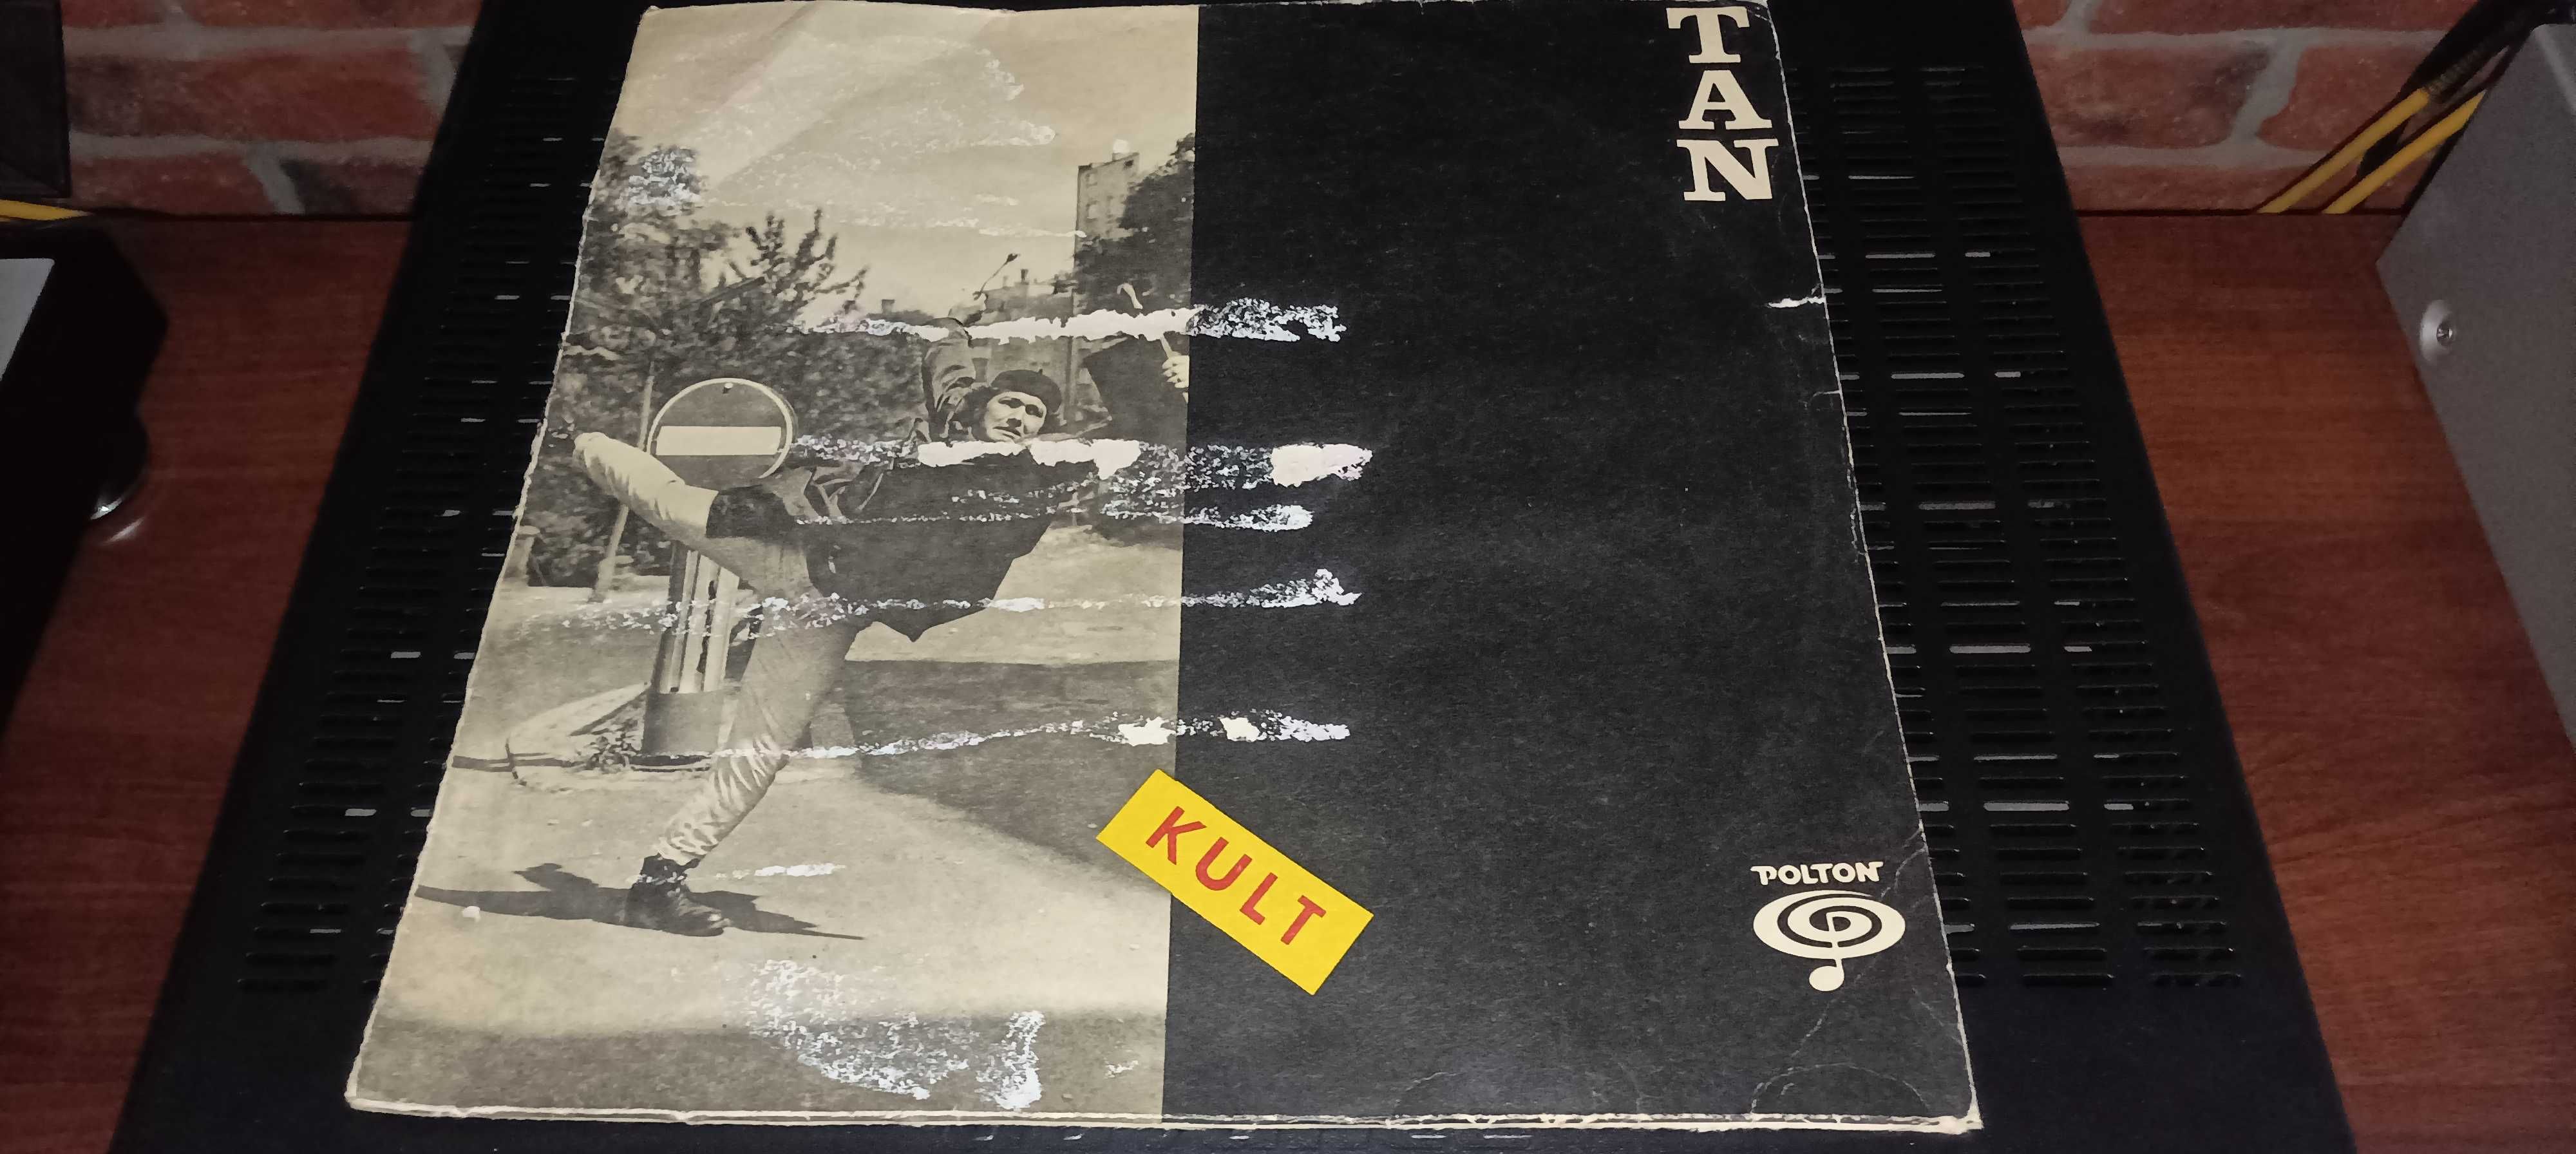 KULT - Tan płyta winylowa